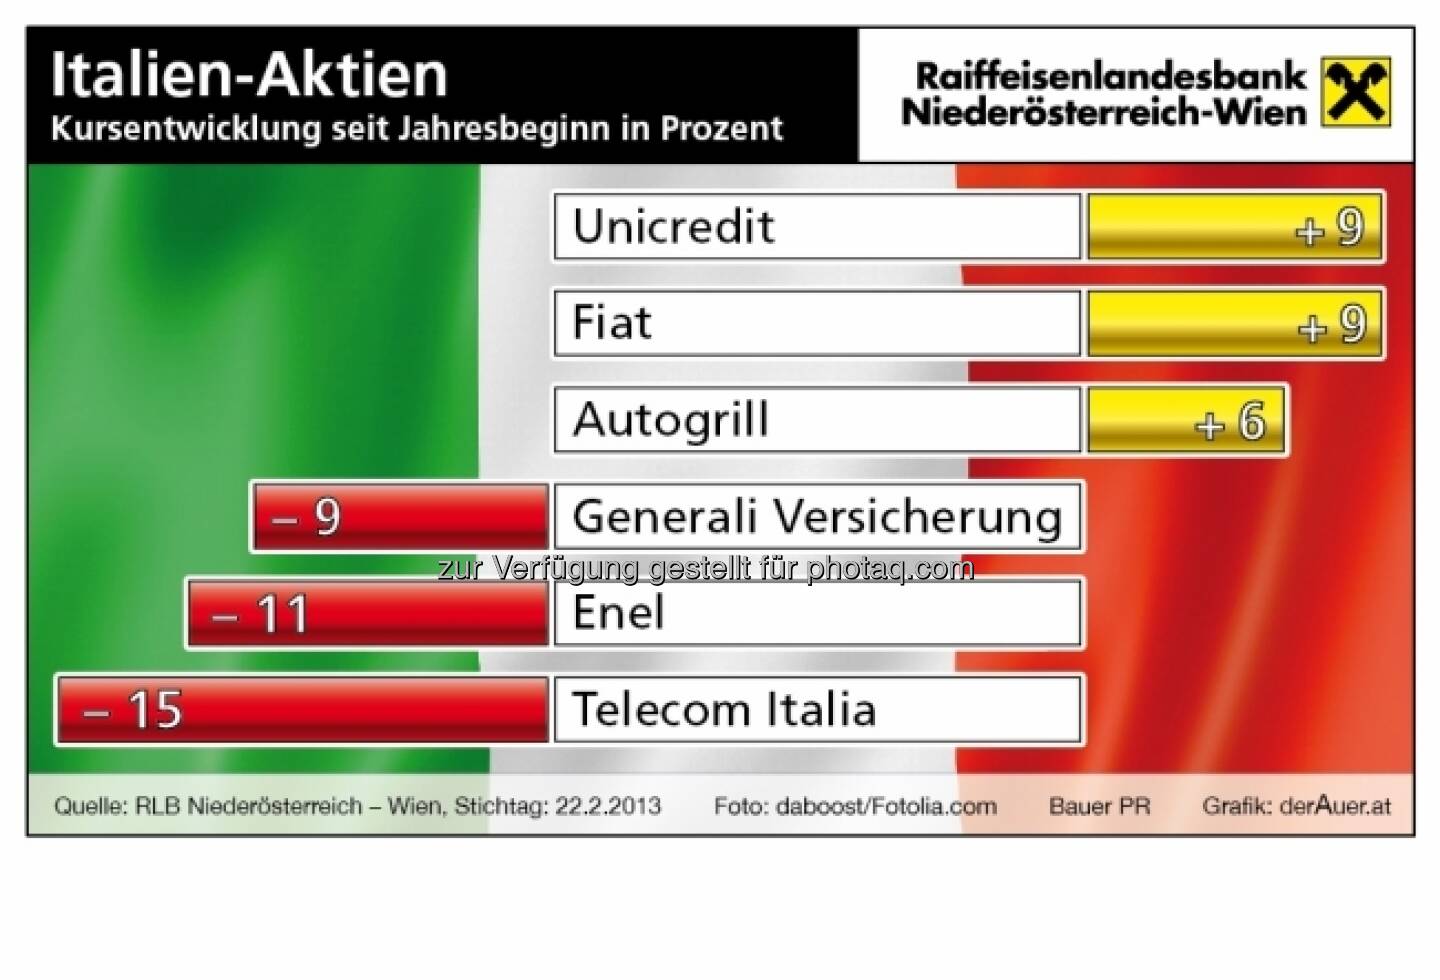 Italien-Aktien year-to-date 2013 (c) derAuer Grafik Buch Web